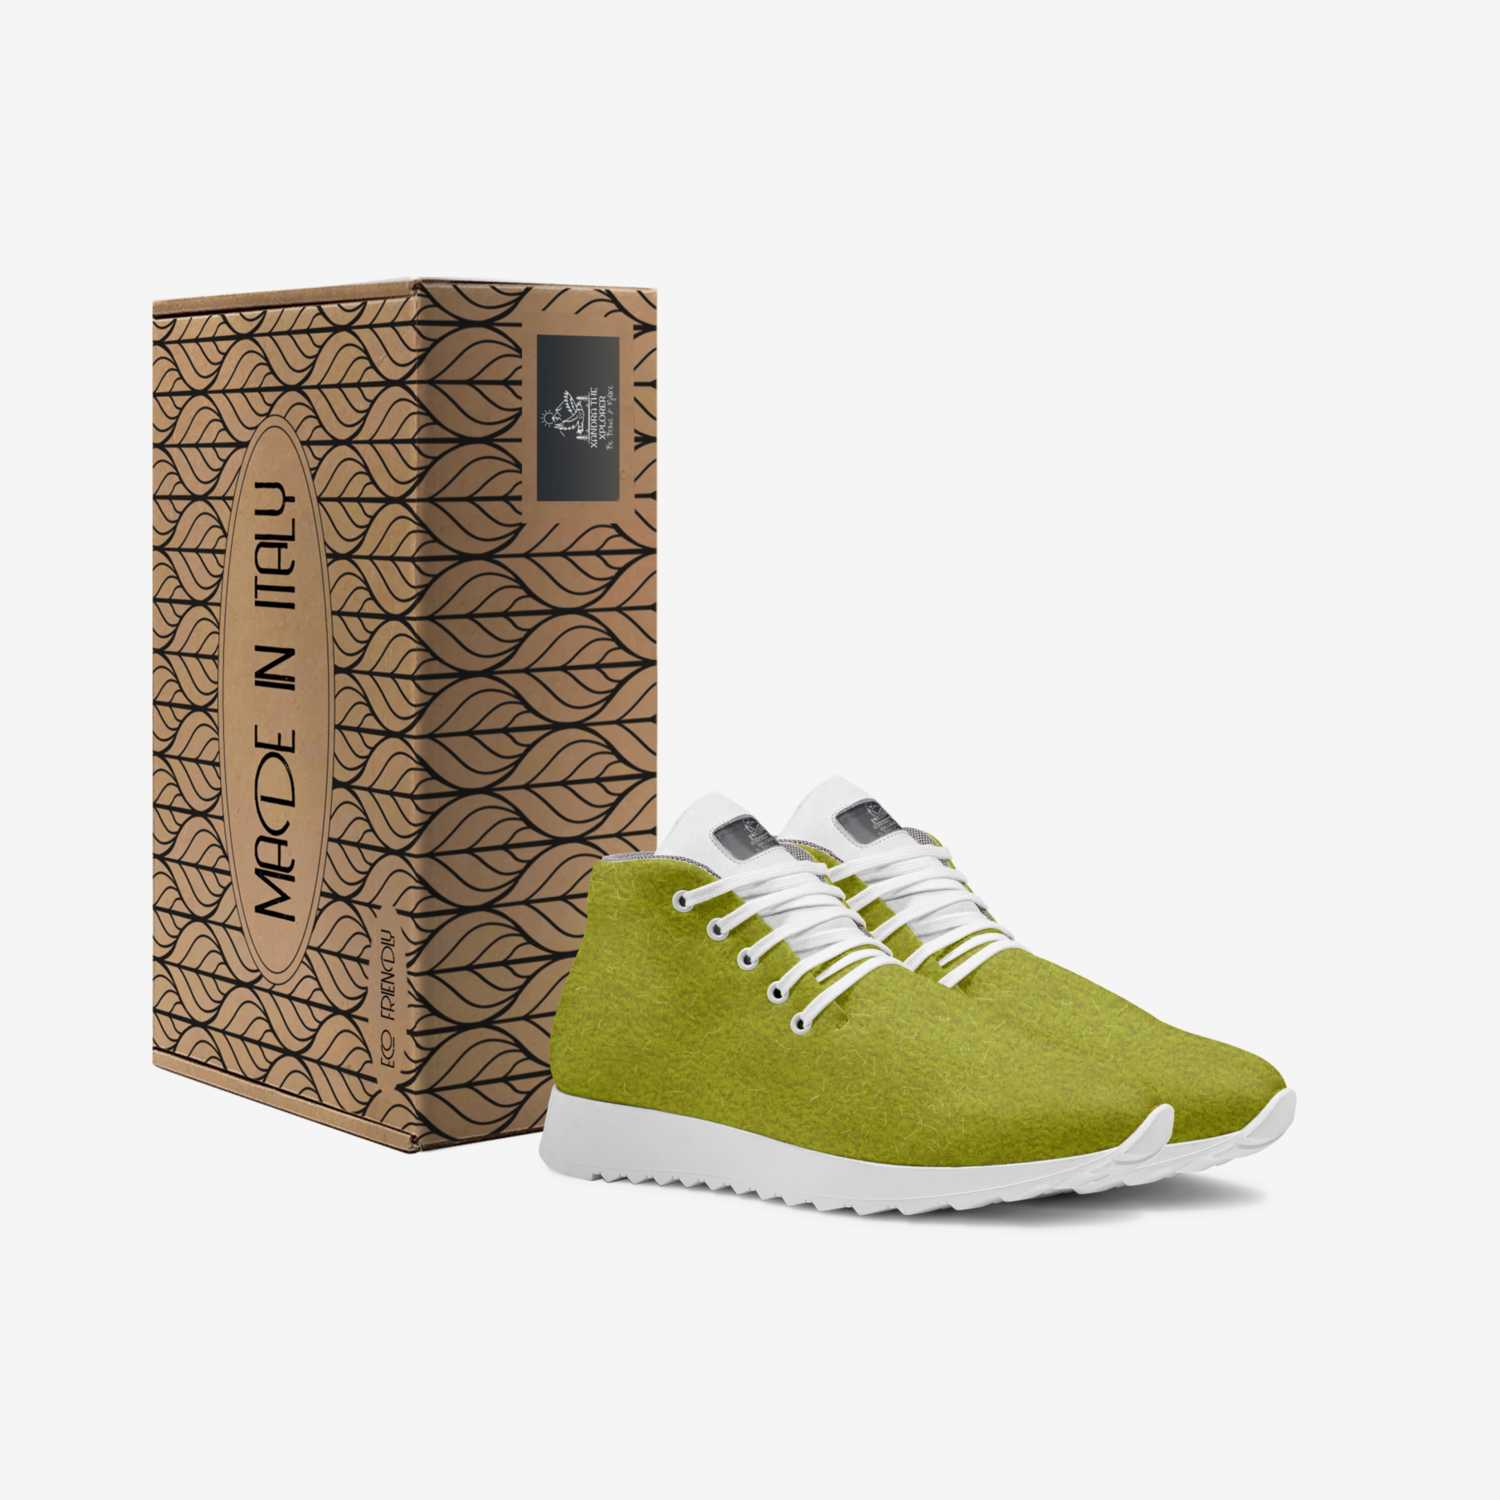 The Xplorer custom made in Italy shoes by Xandra Keshet | Box view